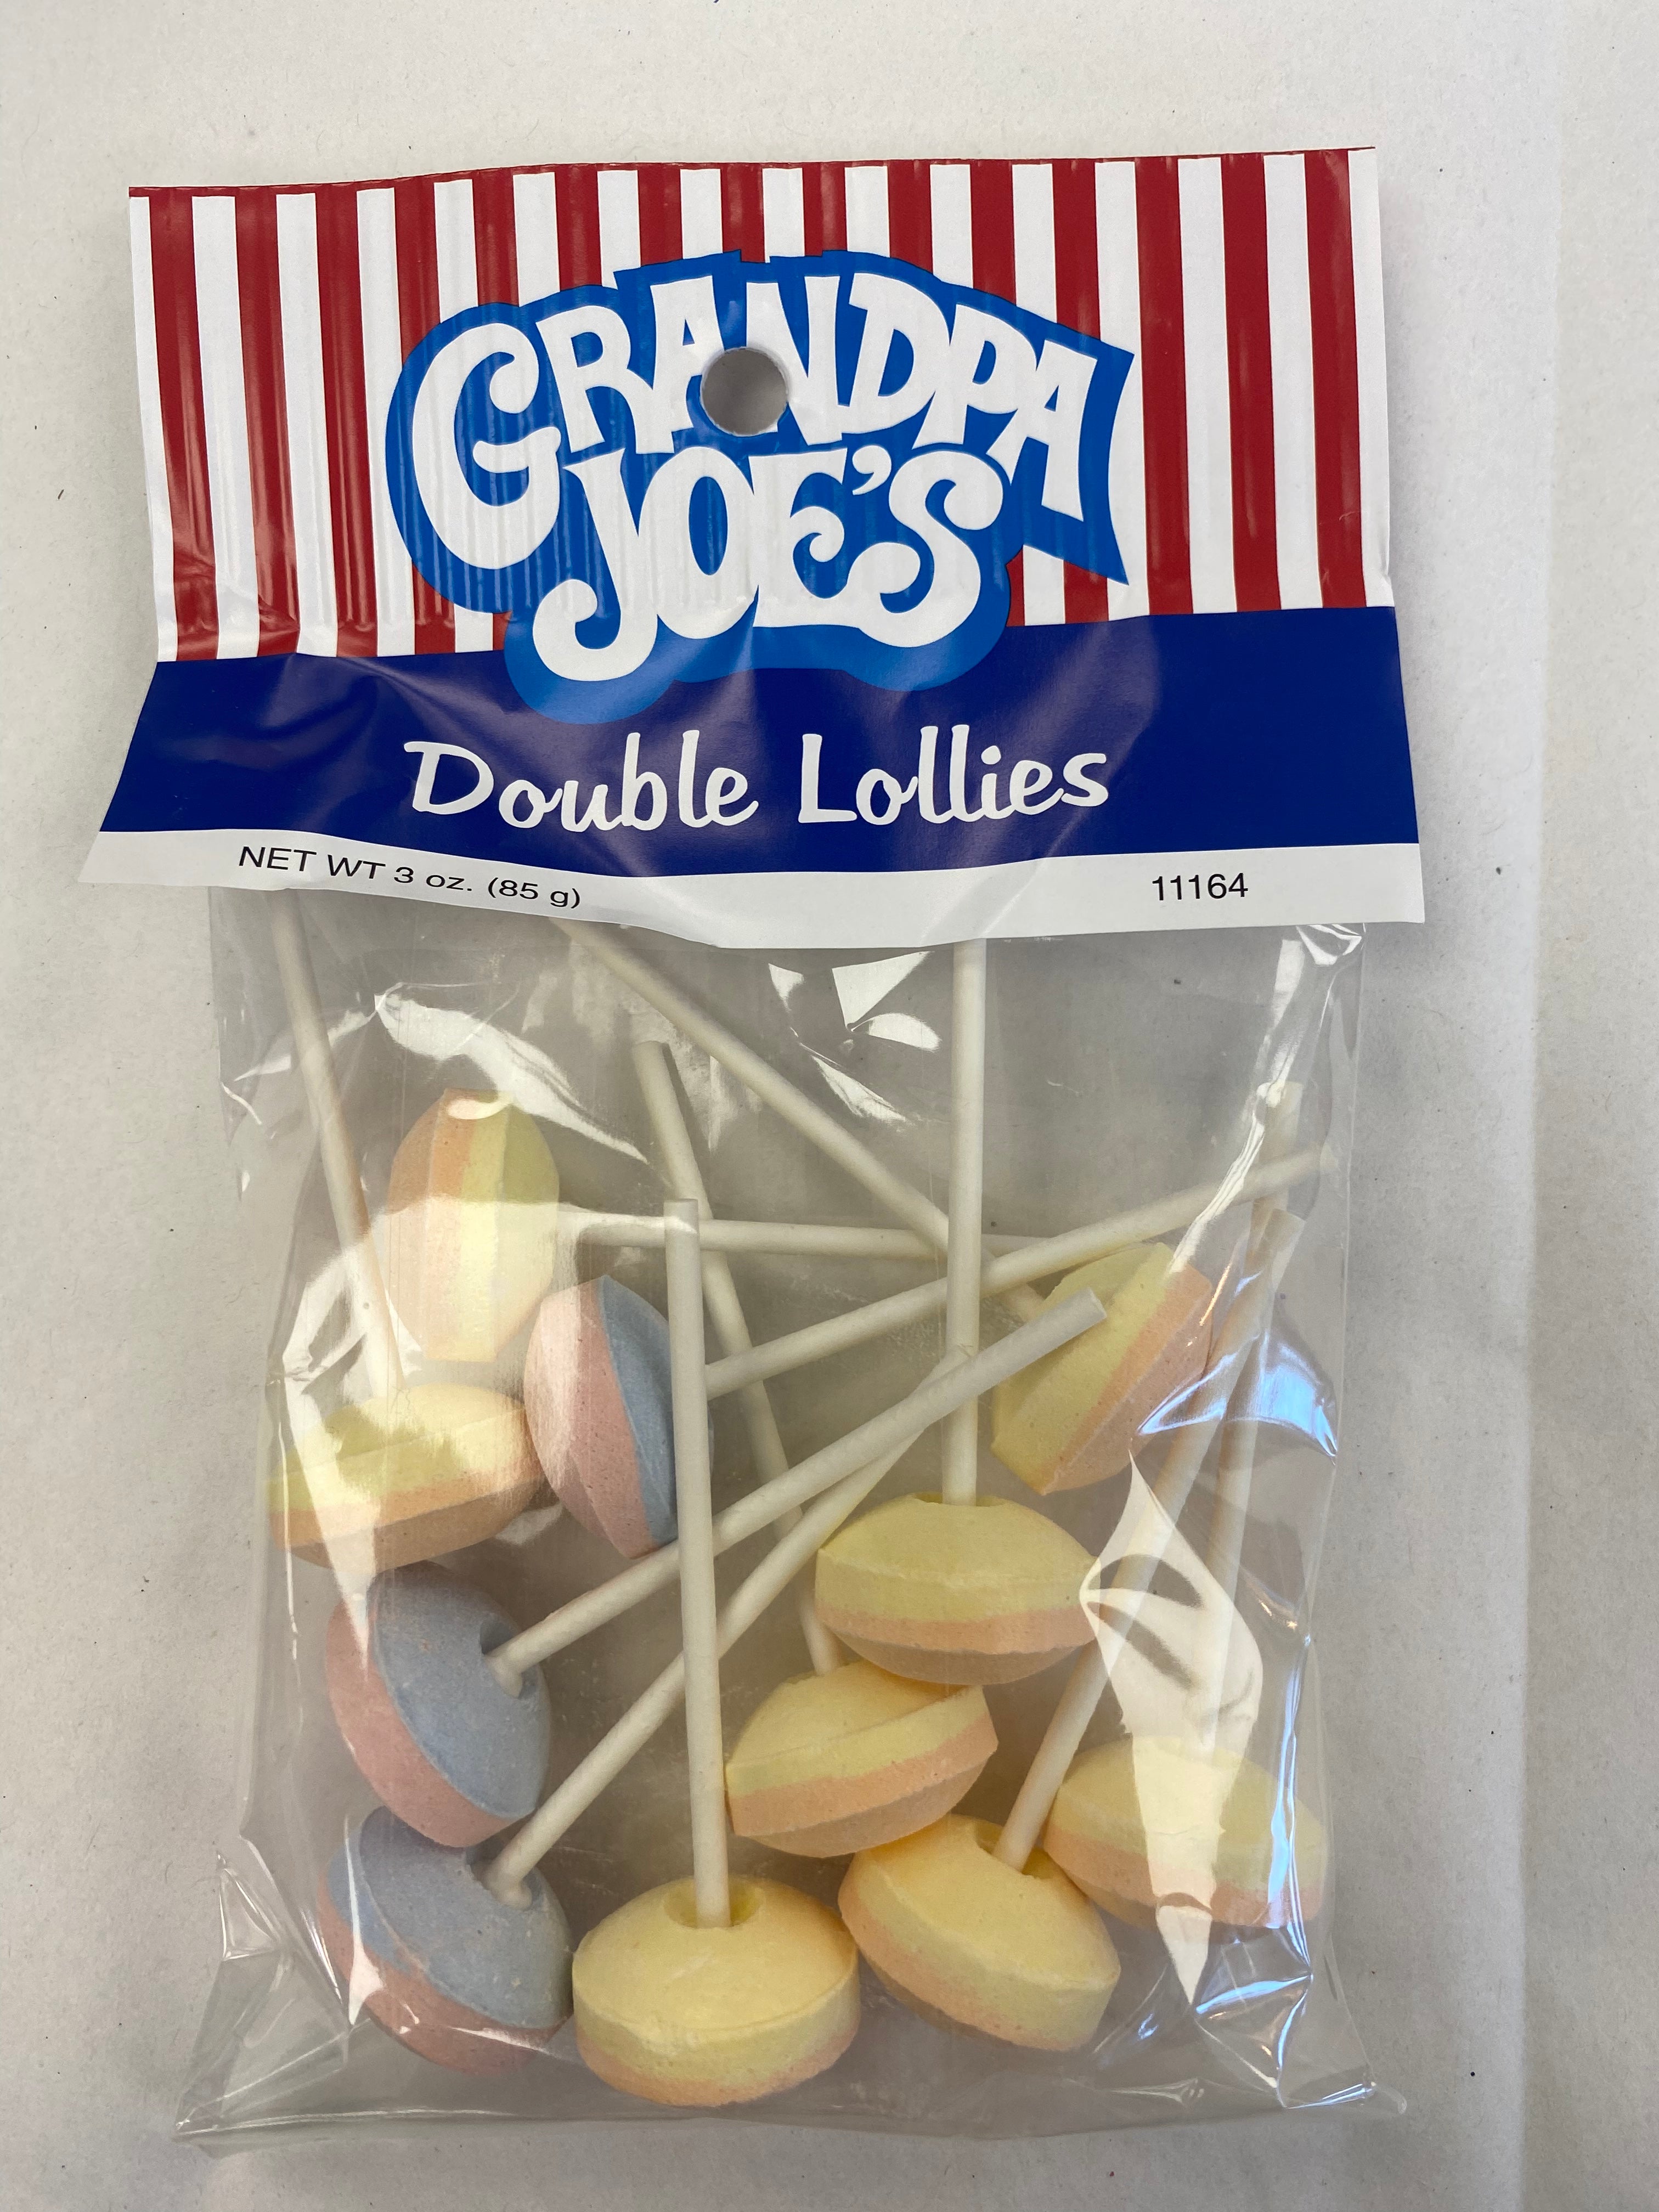 Springtime Candy Buttons - Grandpa Joe's Candy Shop